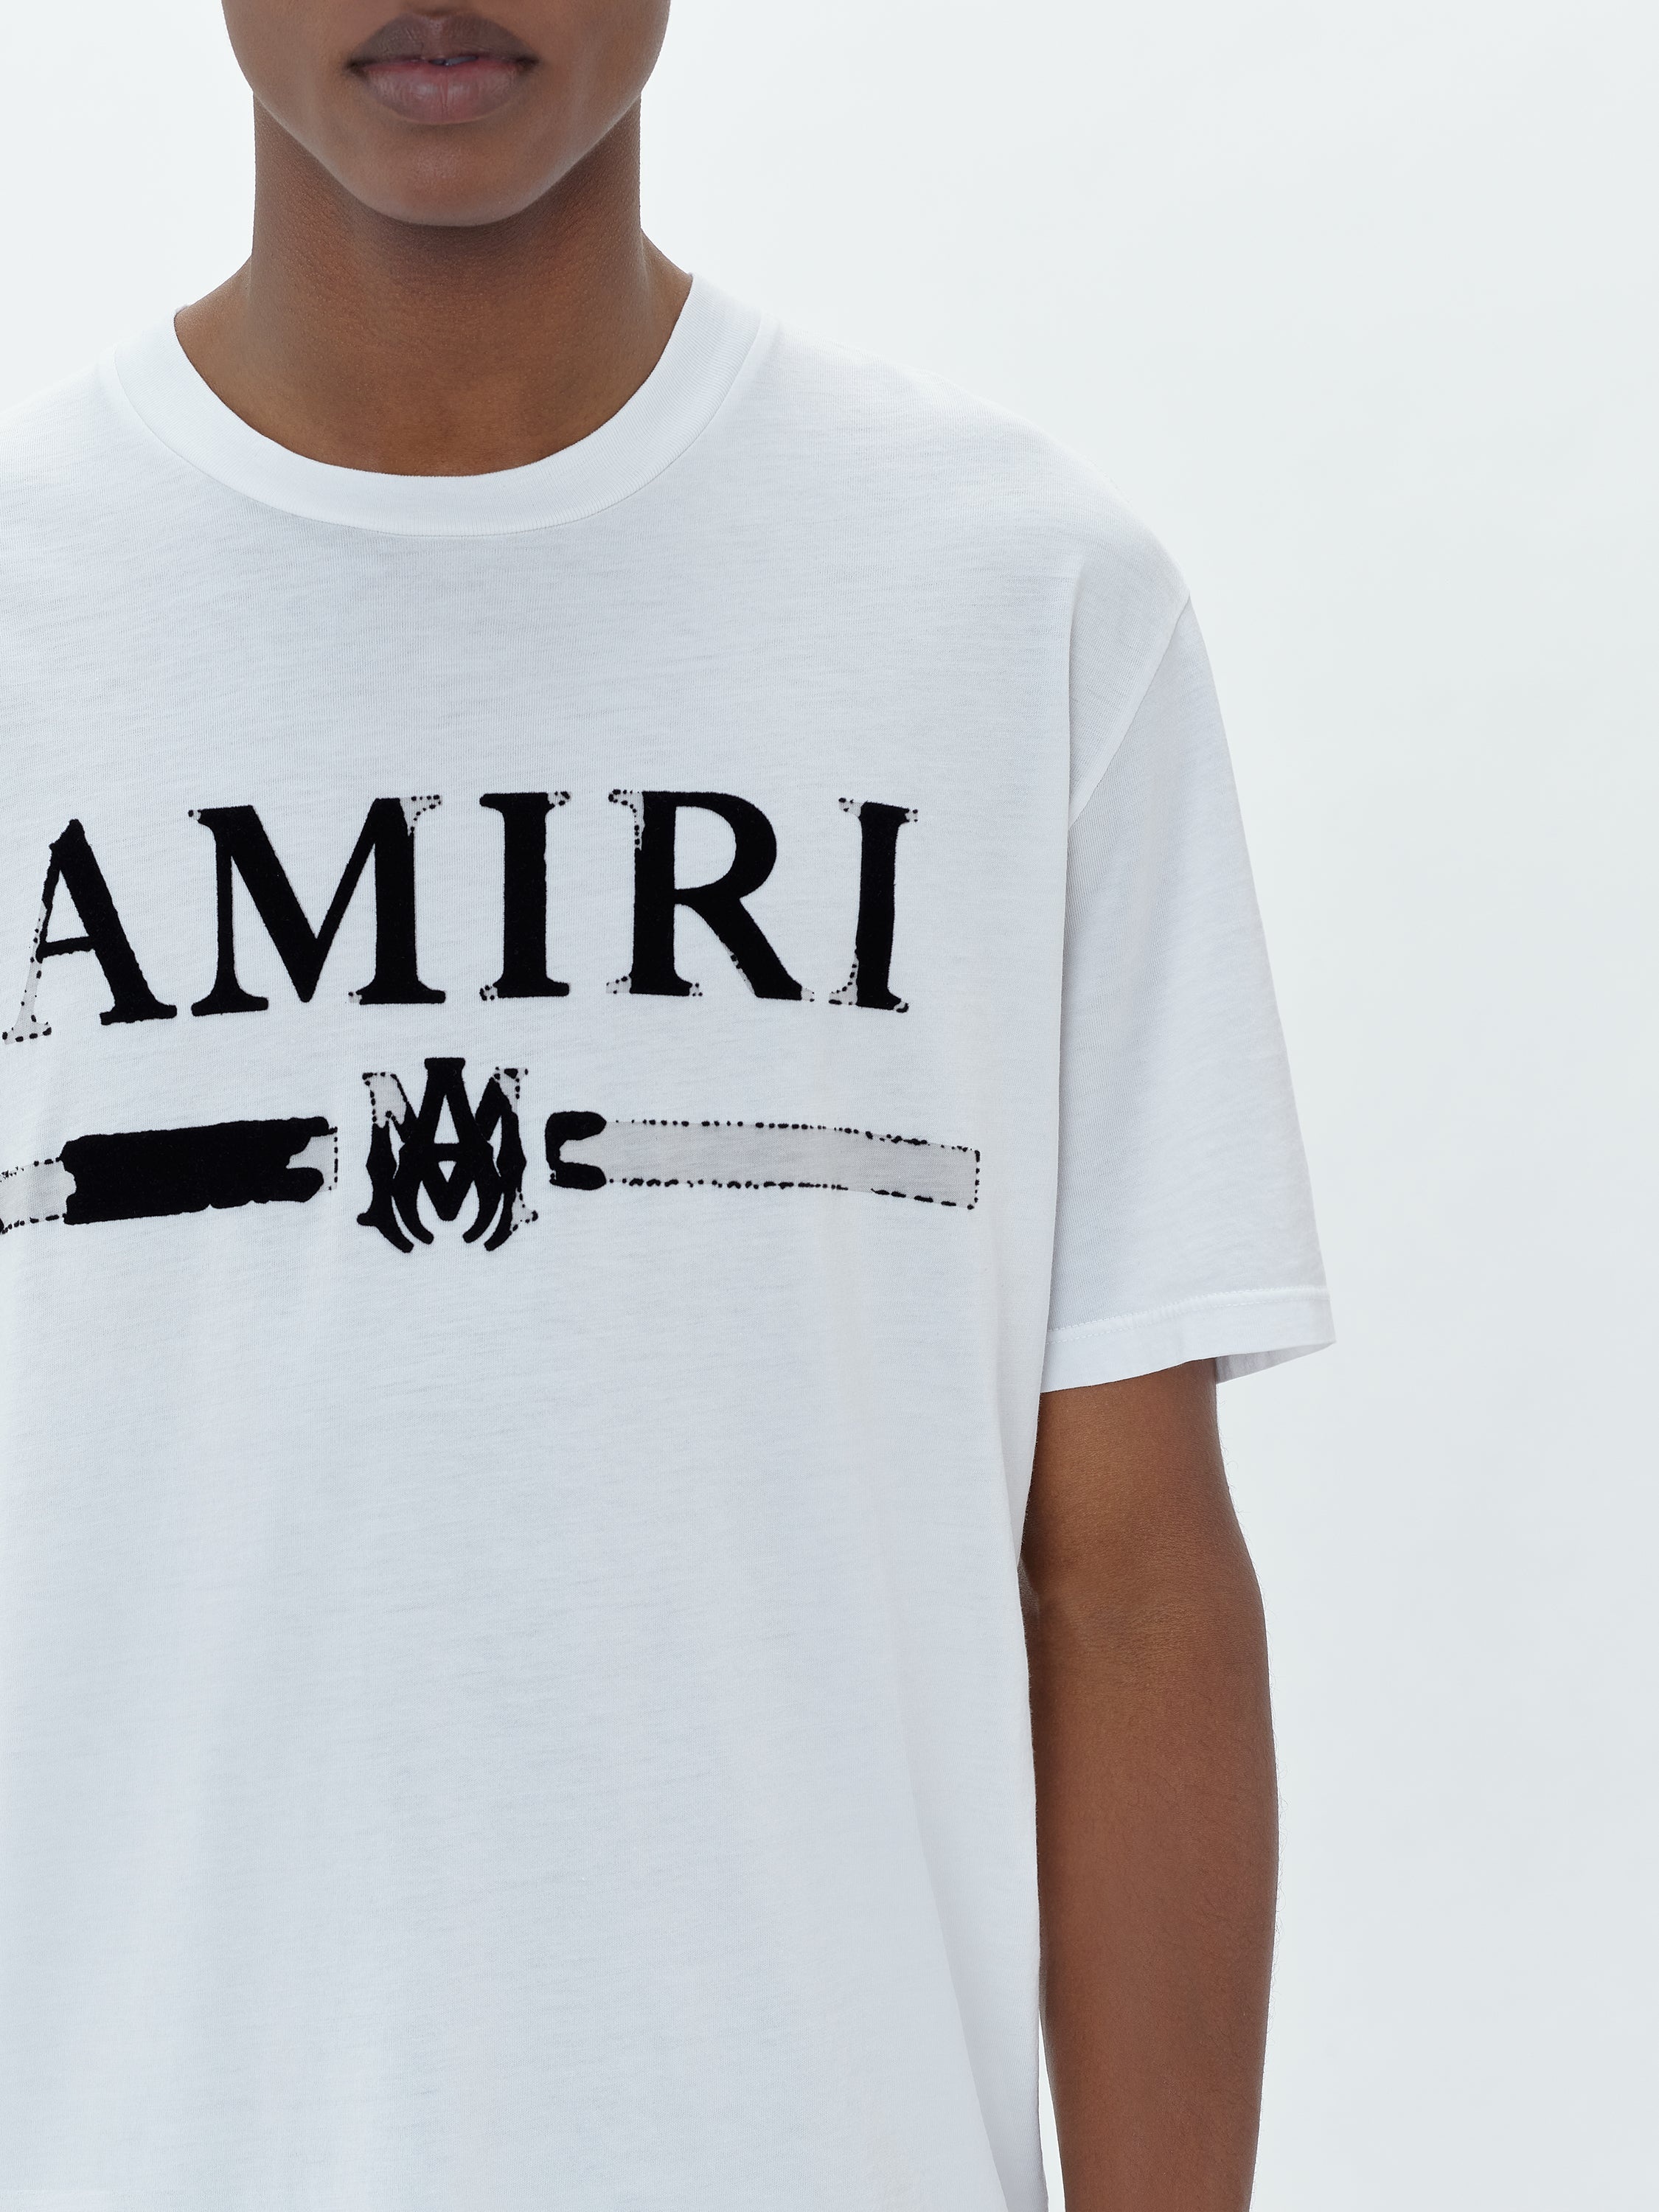 AMIRI アミリ M.A. Bar Appliqué Tシャツ ホワイト S